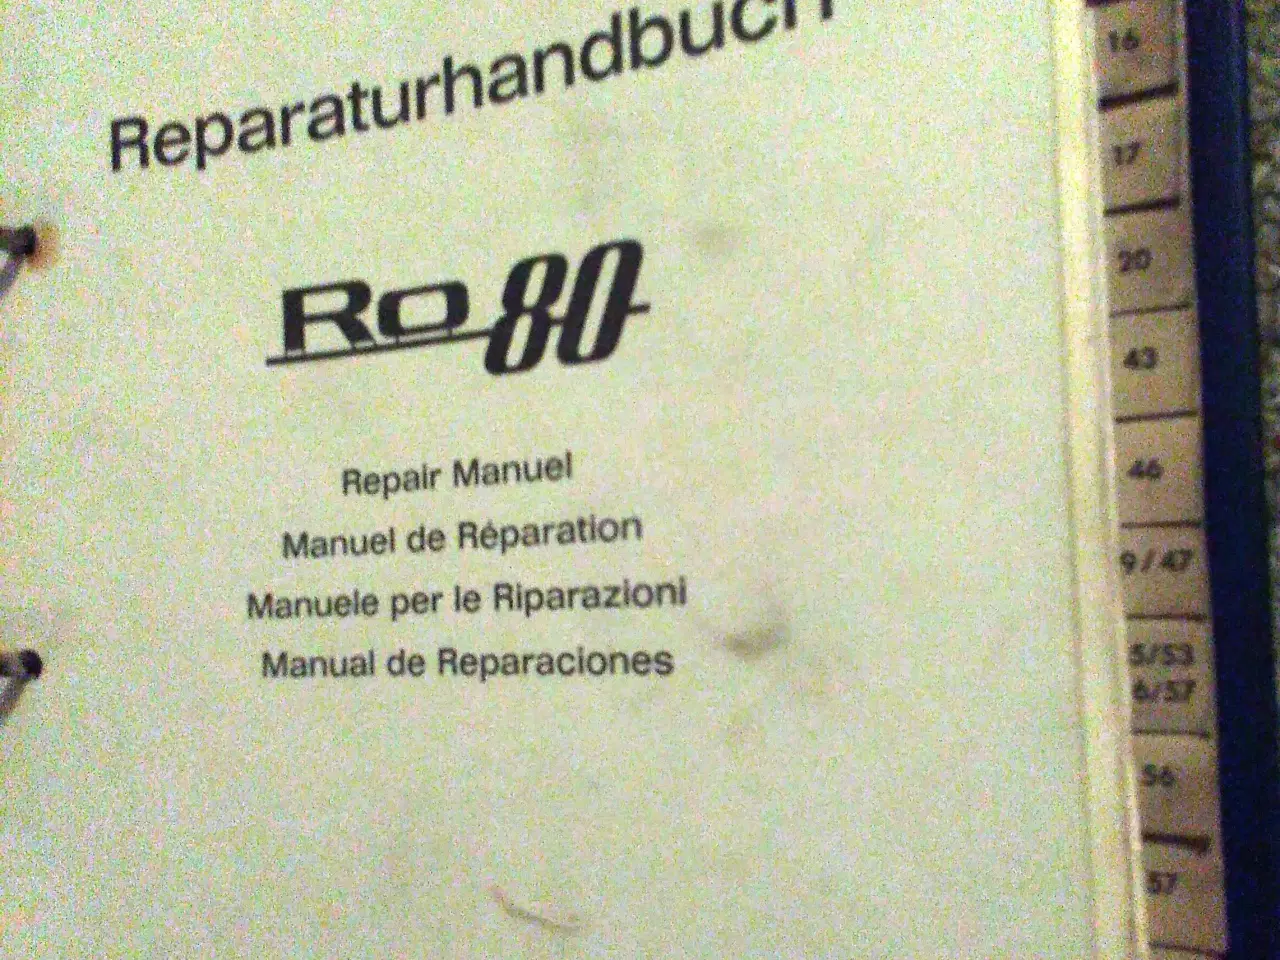 Billede 3 - NSU RO 80, Reparaturhandbuch.